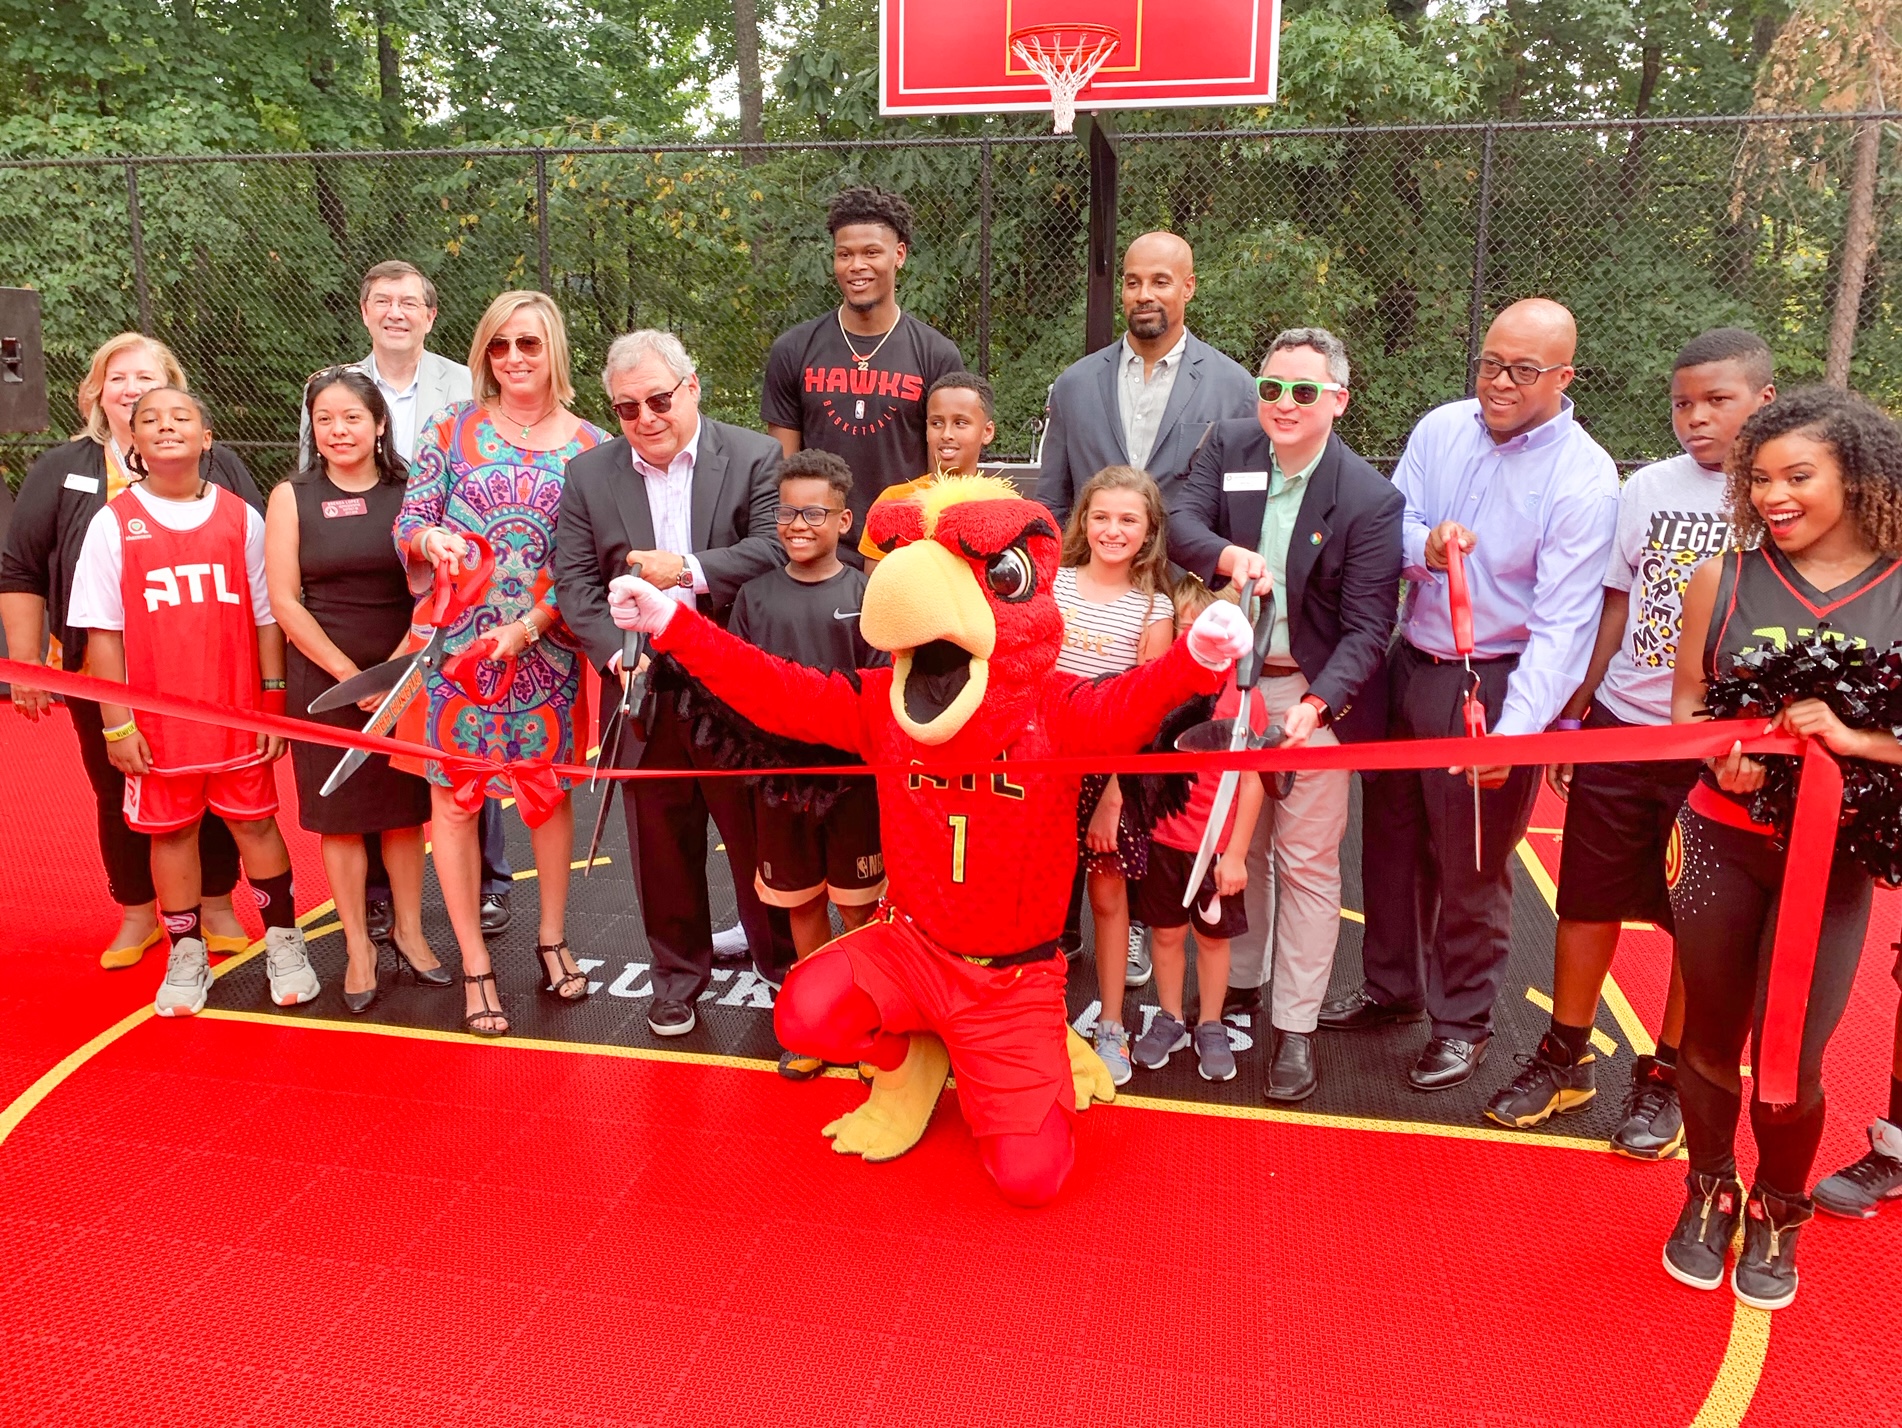 Atlanta Hawks open basketball court, game room in Cobb